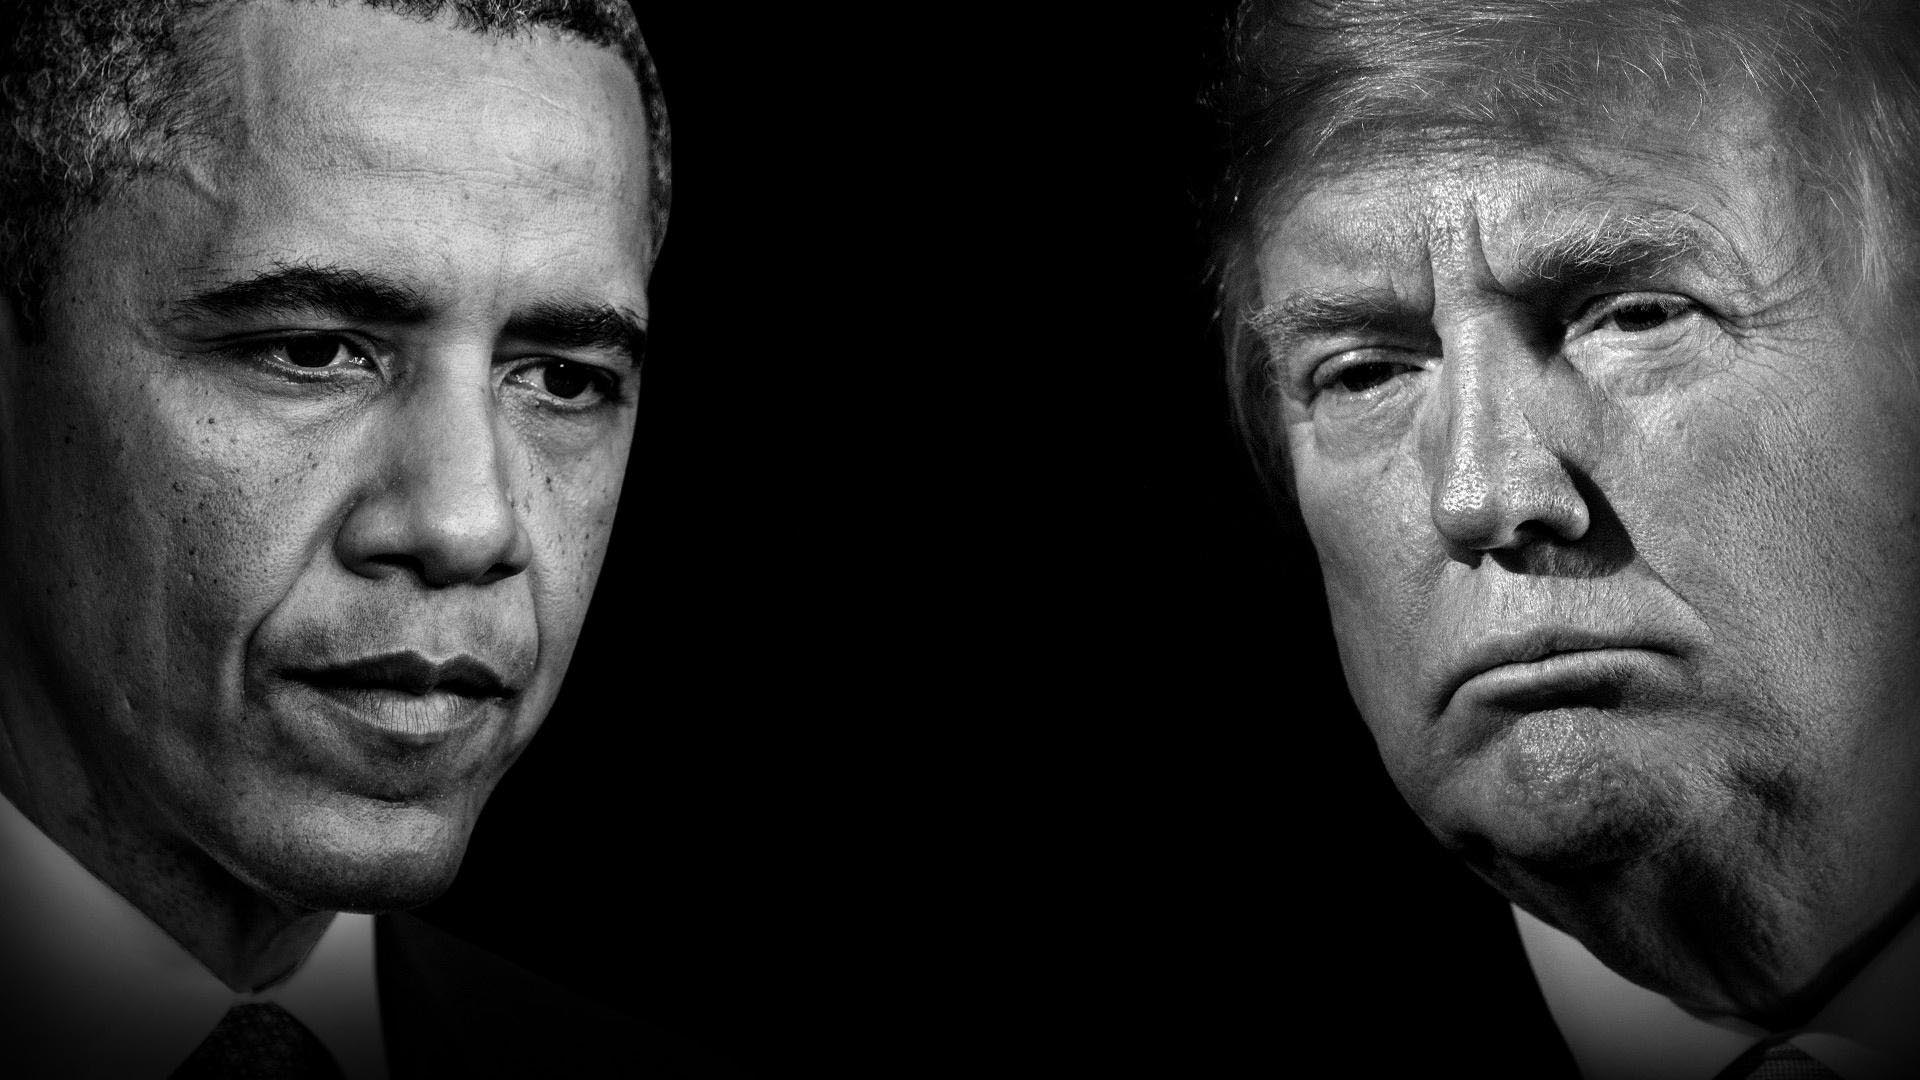 Composite of portraits of Barack Obama and Donald Trump.